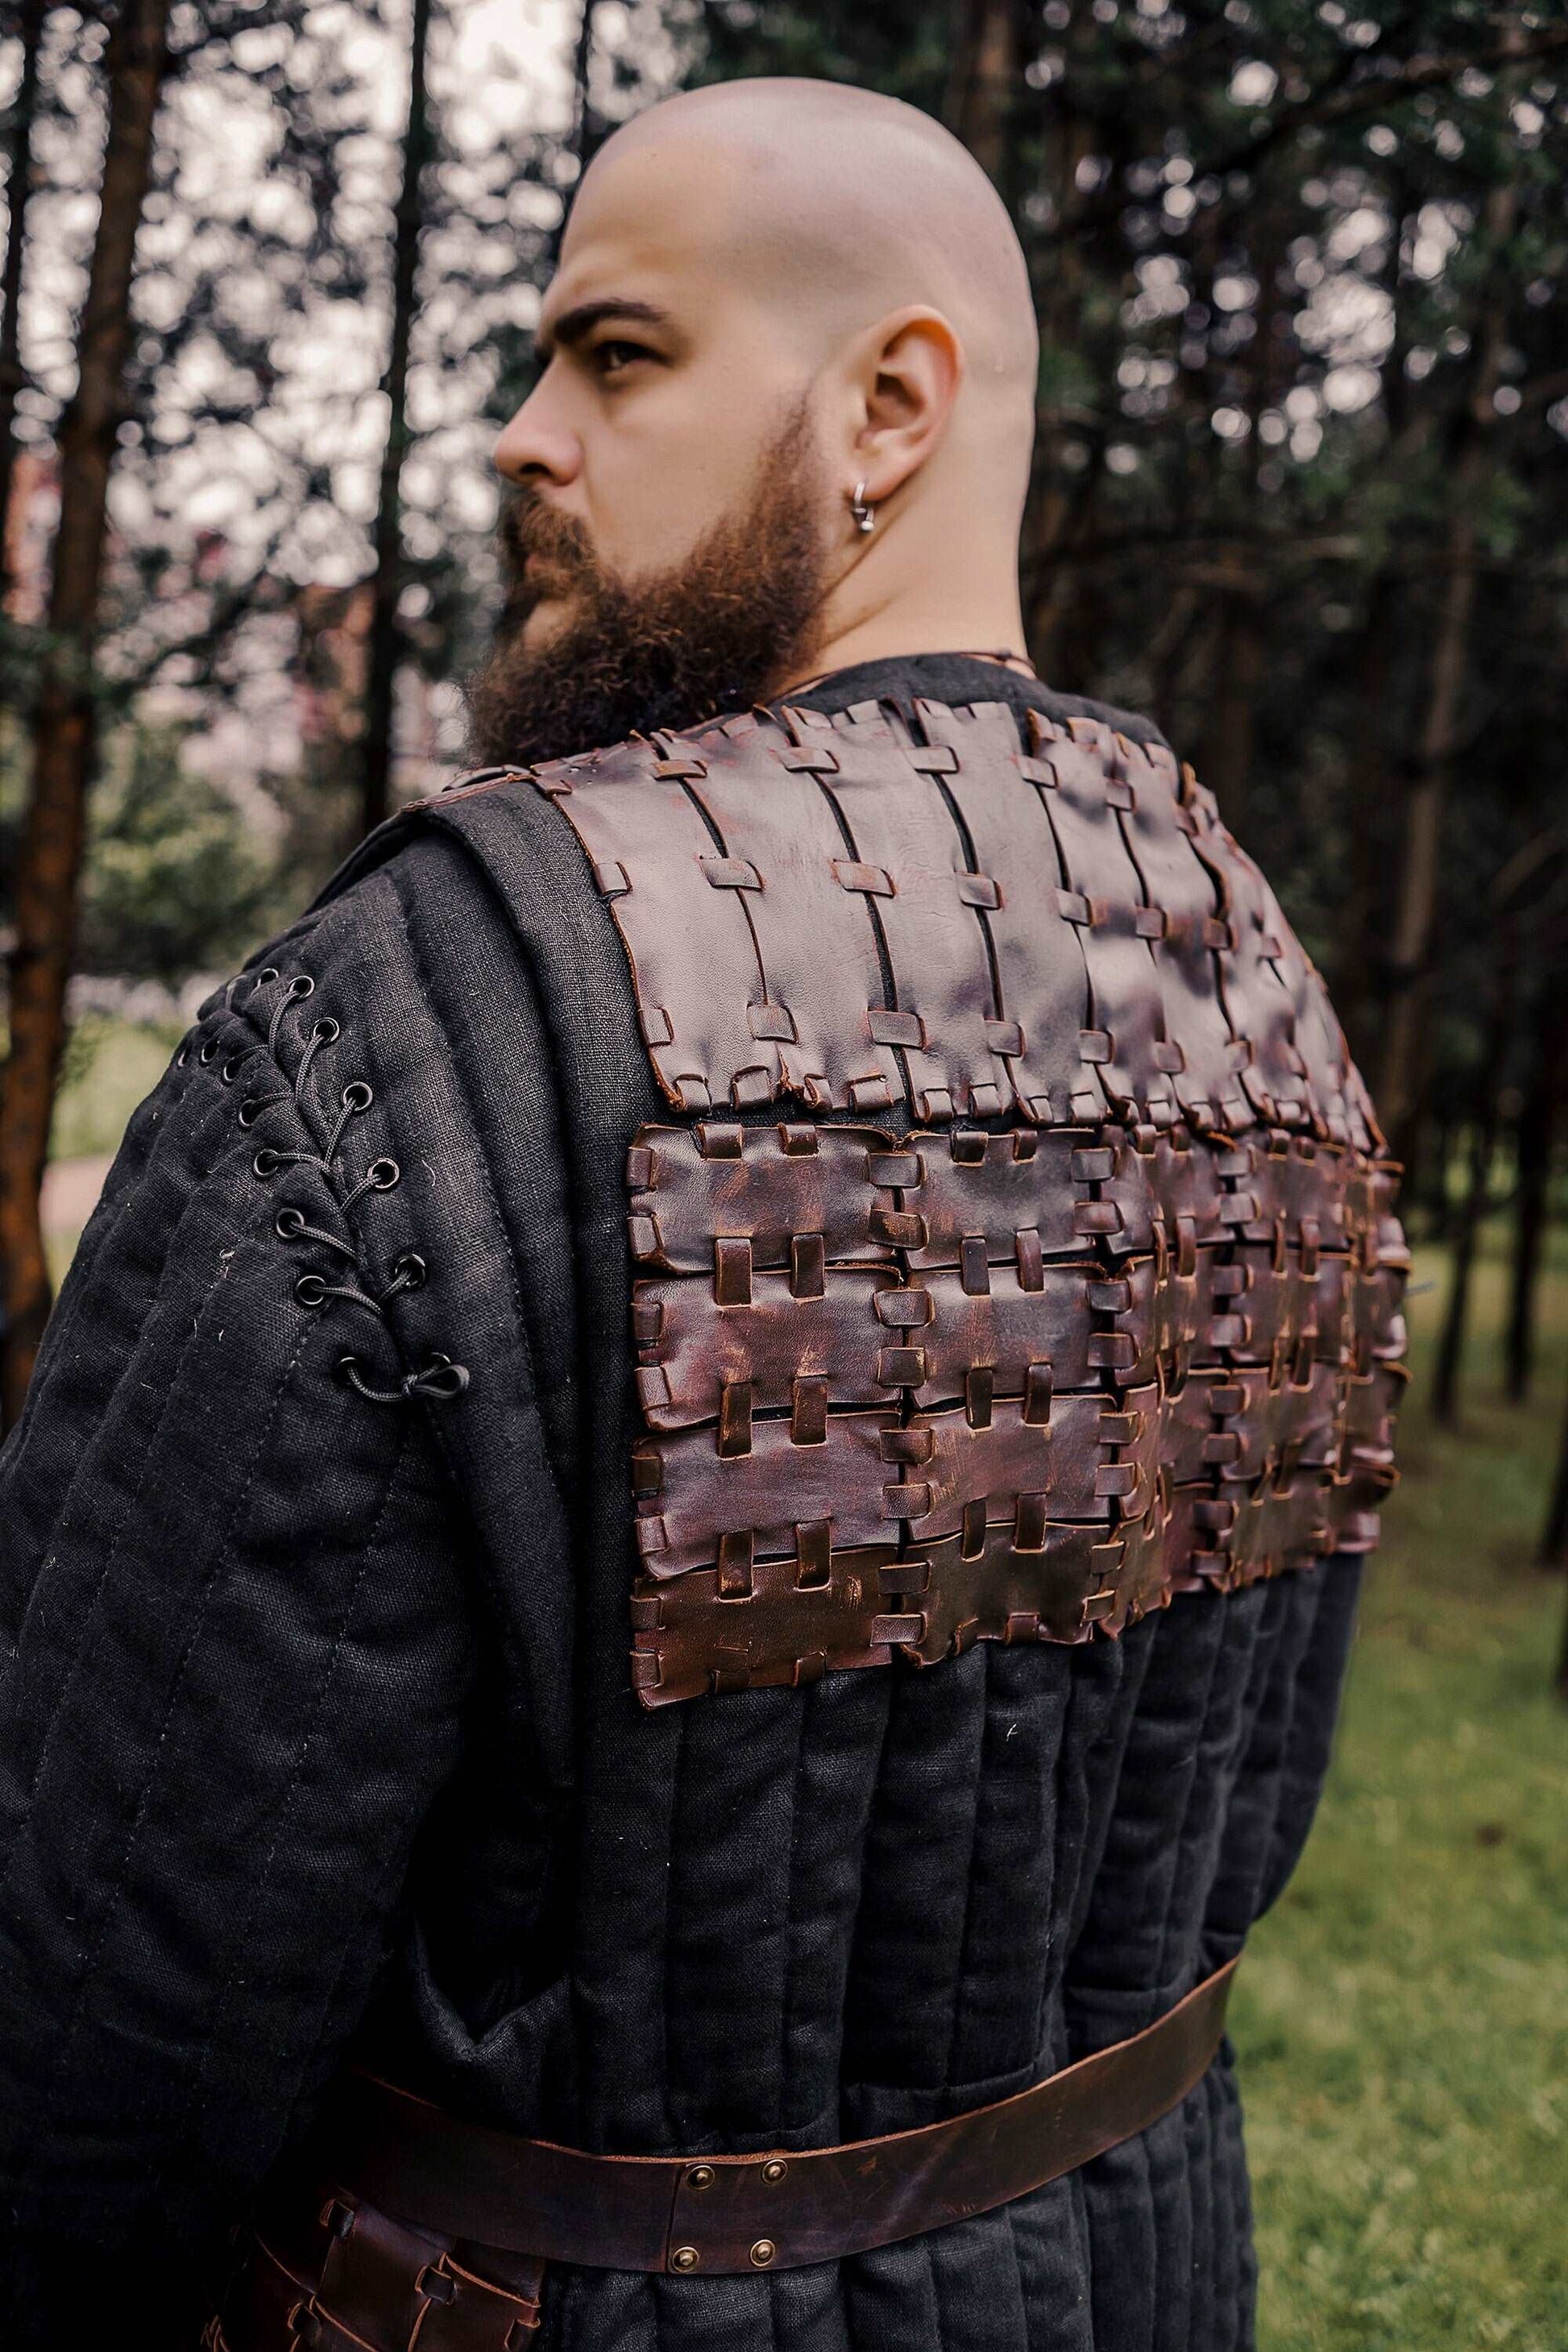 Bjorn body armor (Vikings)